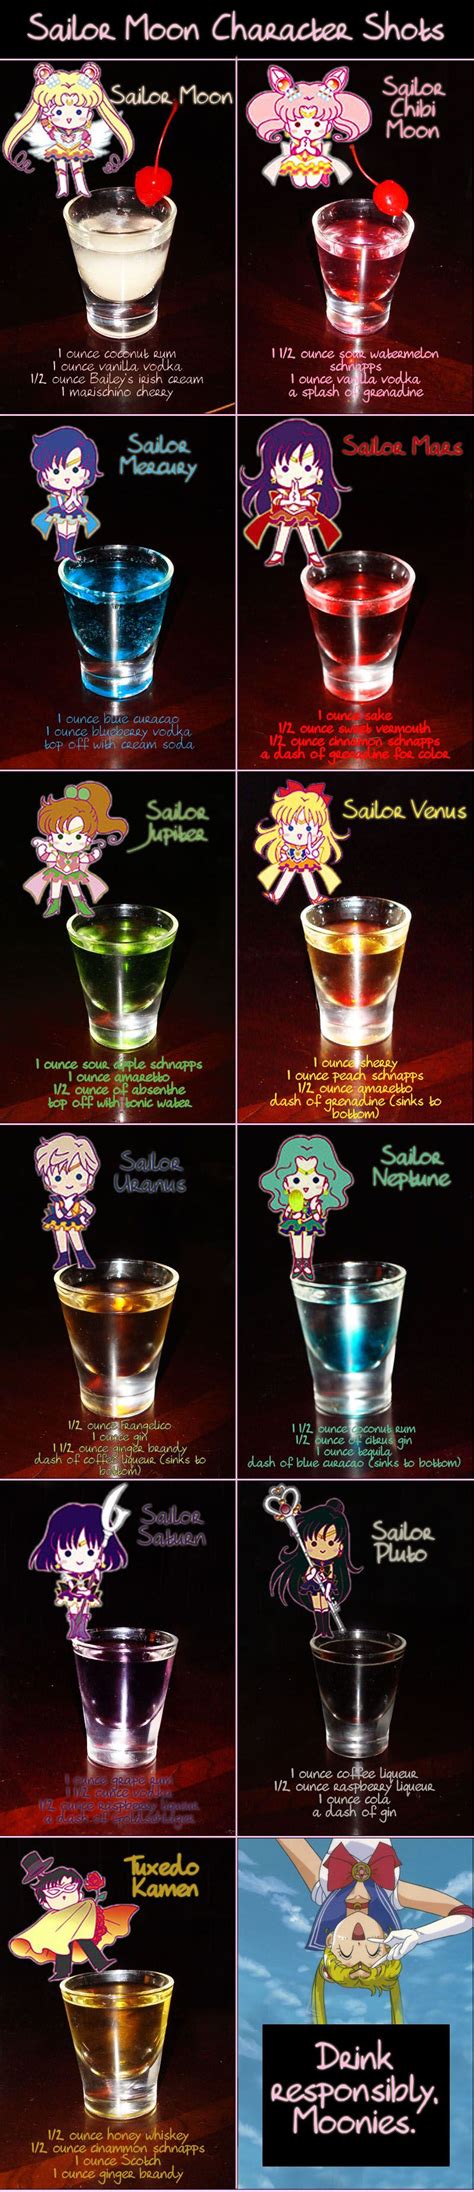 Sailor Moon Character Shots Themed Drinks Alcoholic Drinks Drinks